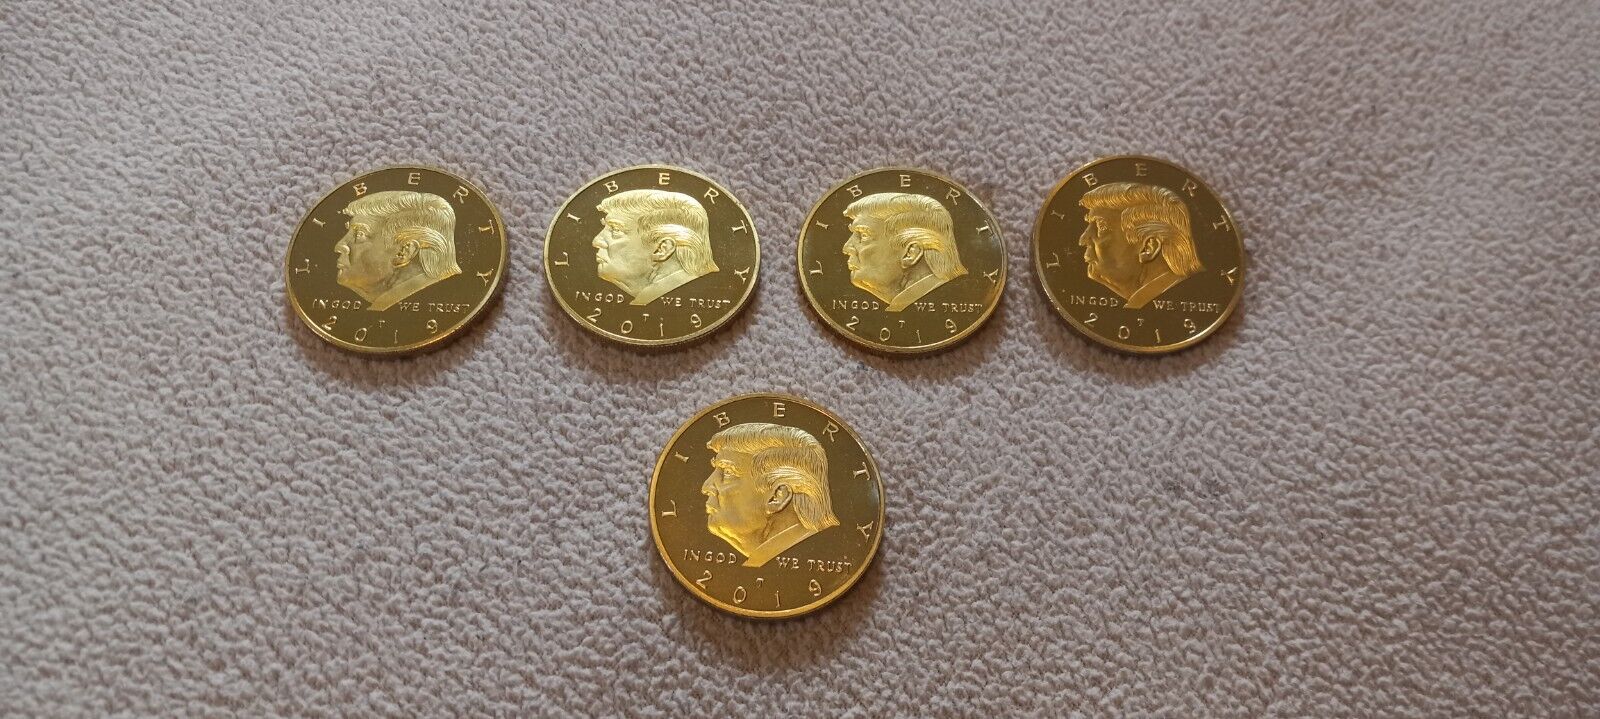 5 Donald Trump Gold-Tone coins 2019 - Excellent Condition